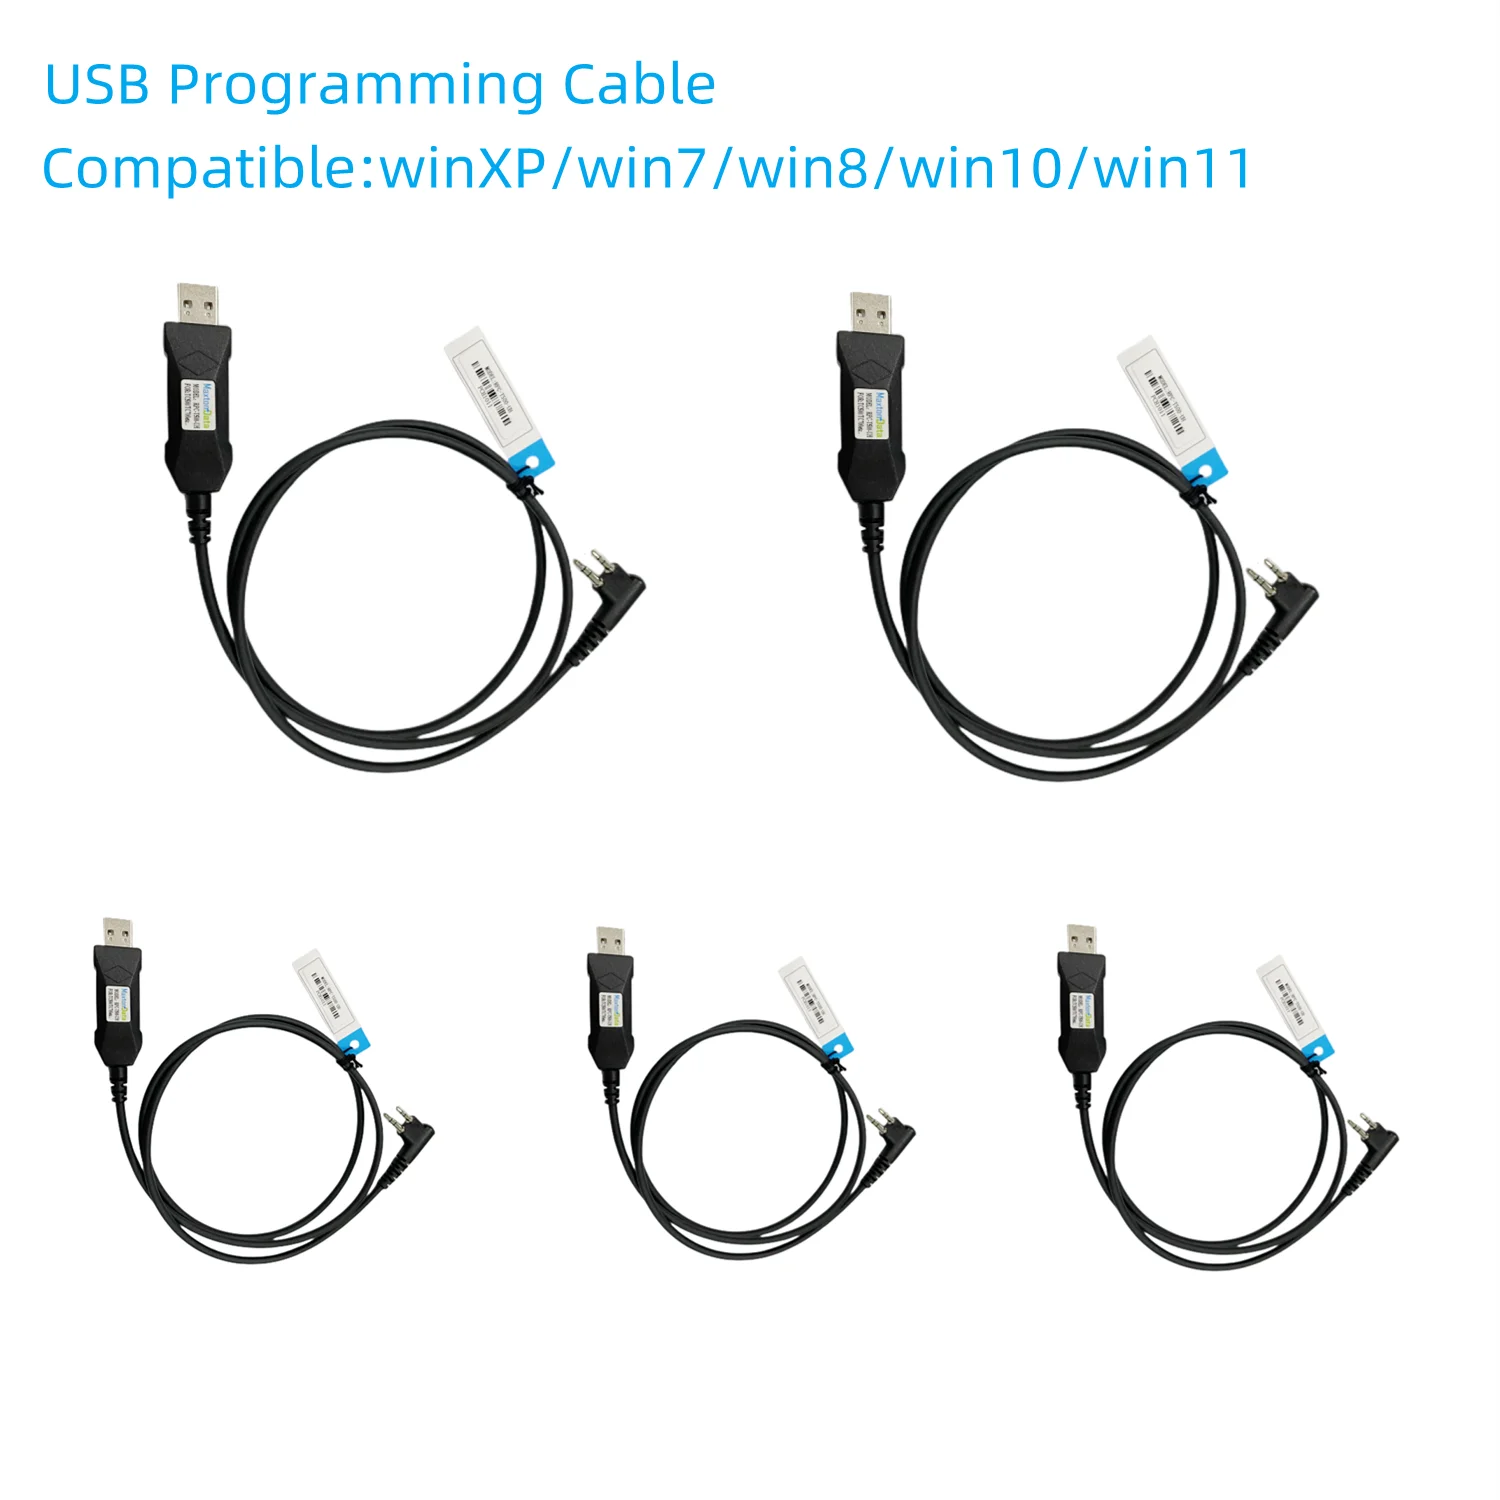 

MaxtonData USB Programming Cable for HYT TC518 TC585 TC580 TC446S TC600 TC610 TC620 write frequency support WIN11 USB Data cable